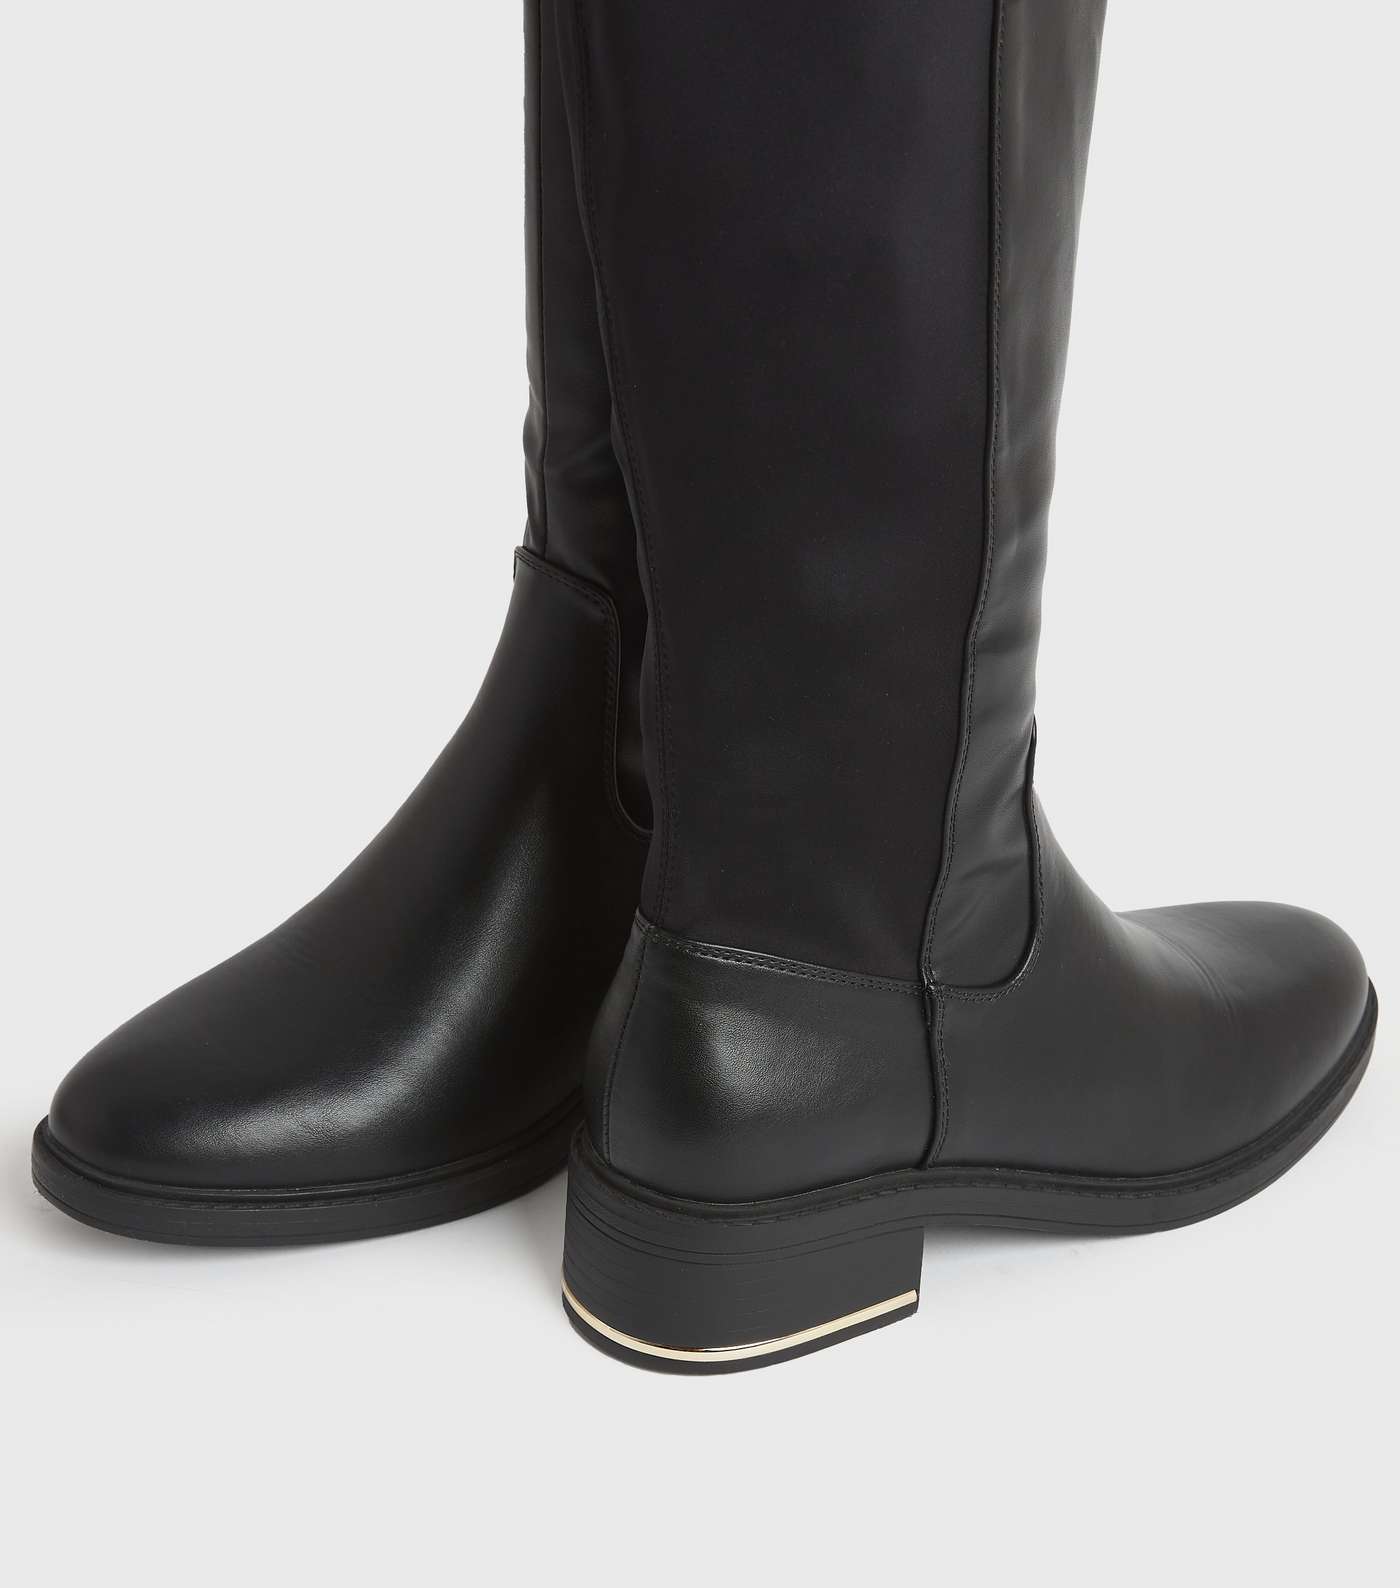 Girls Black Leather-Look Metal Trim Knee High Boots Image 3